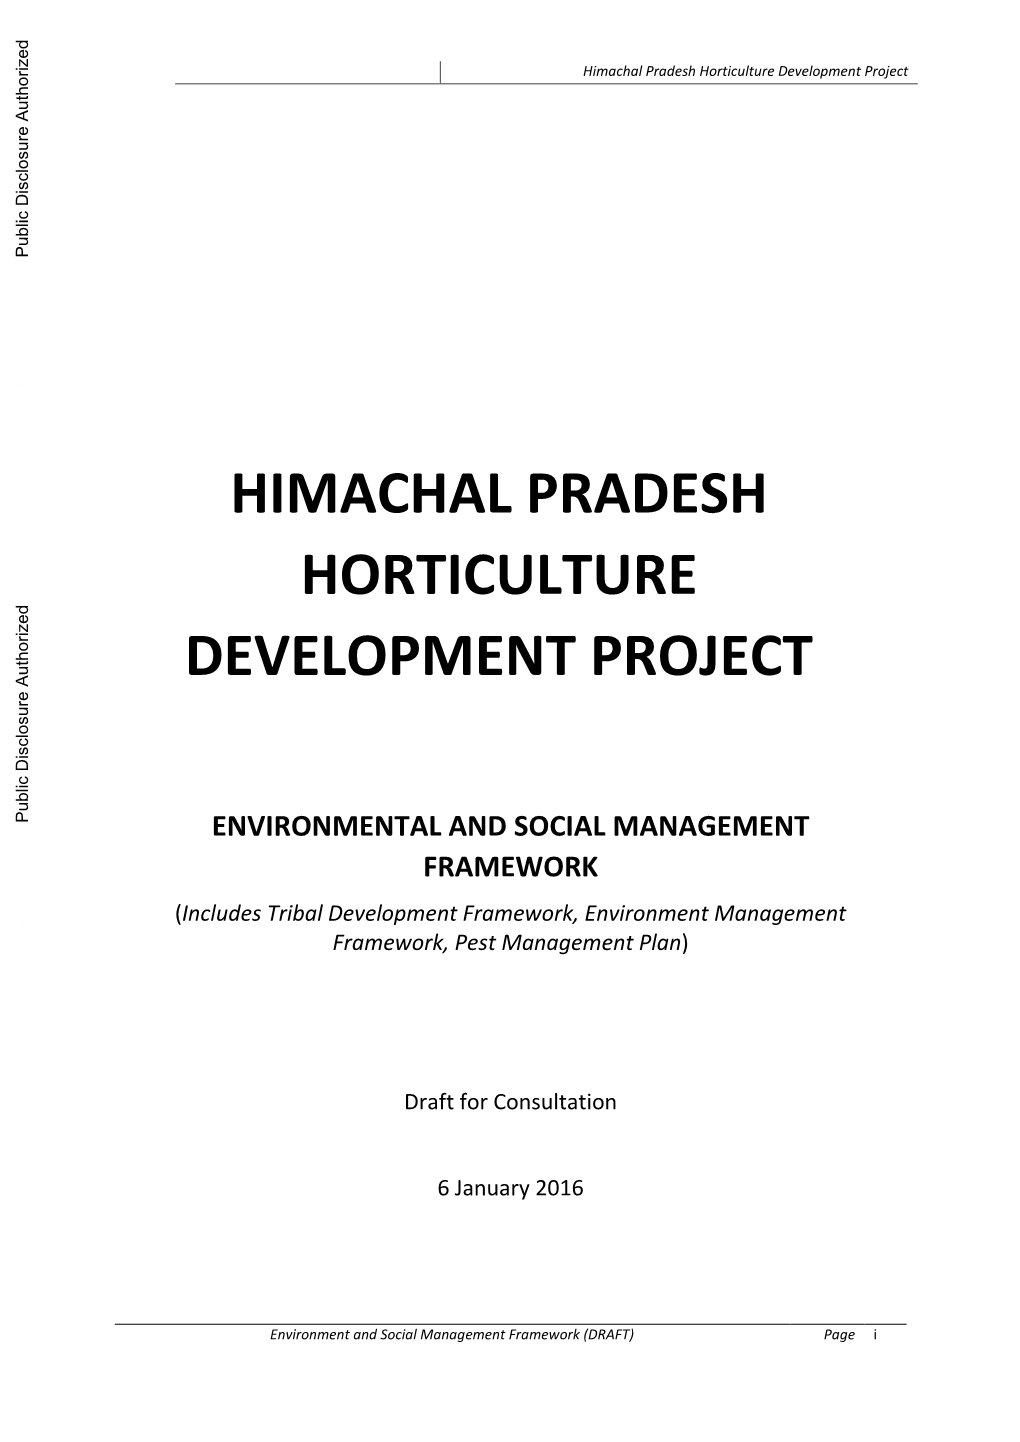 1.0 – Himachal Pradesh Horticulture Development Project